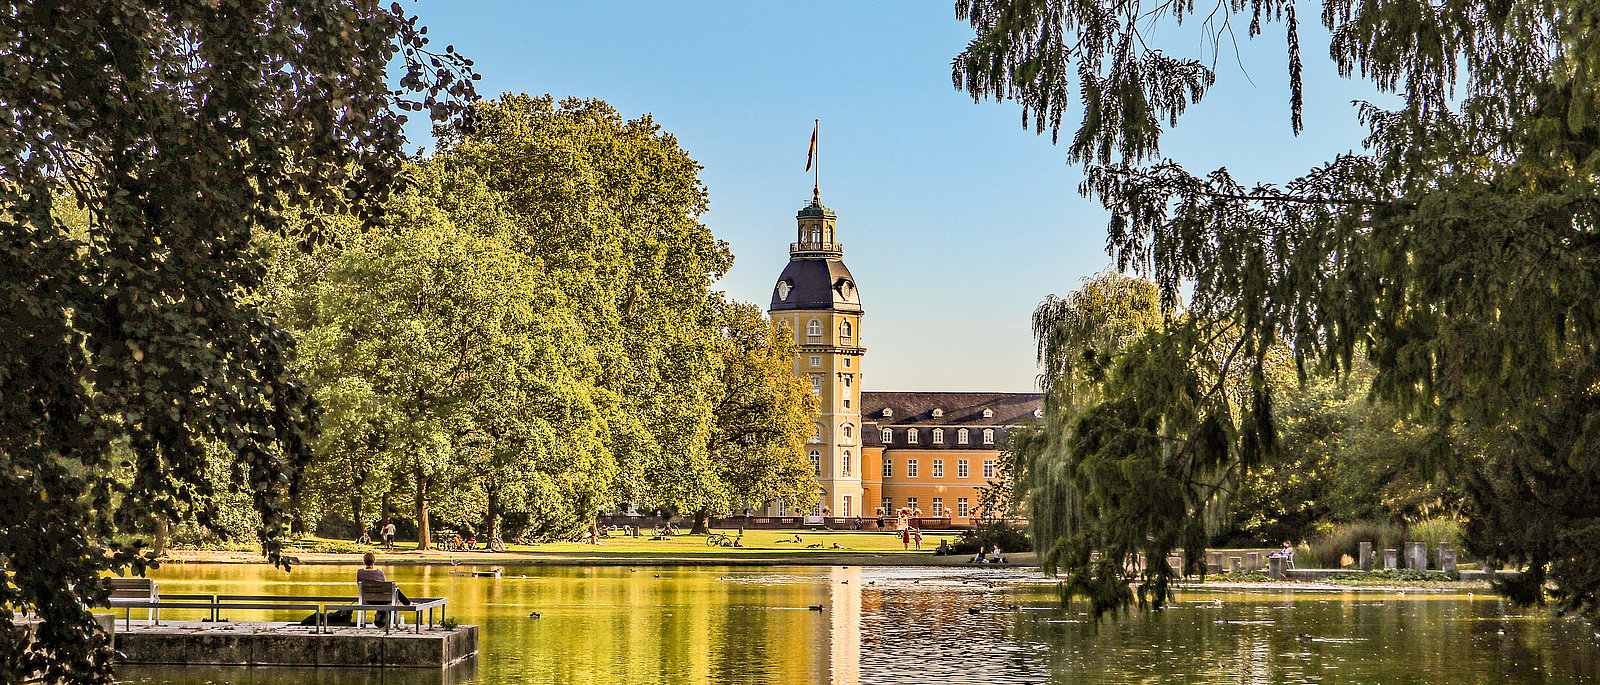 Schlossgarten Karlsruhe in unserer Projektregion Baden-Württemberg